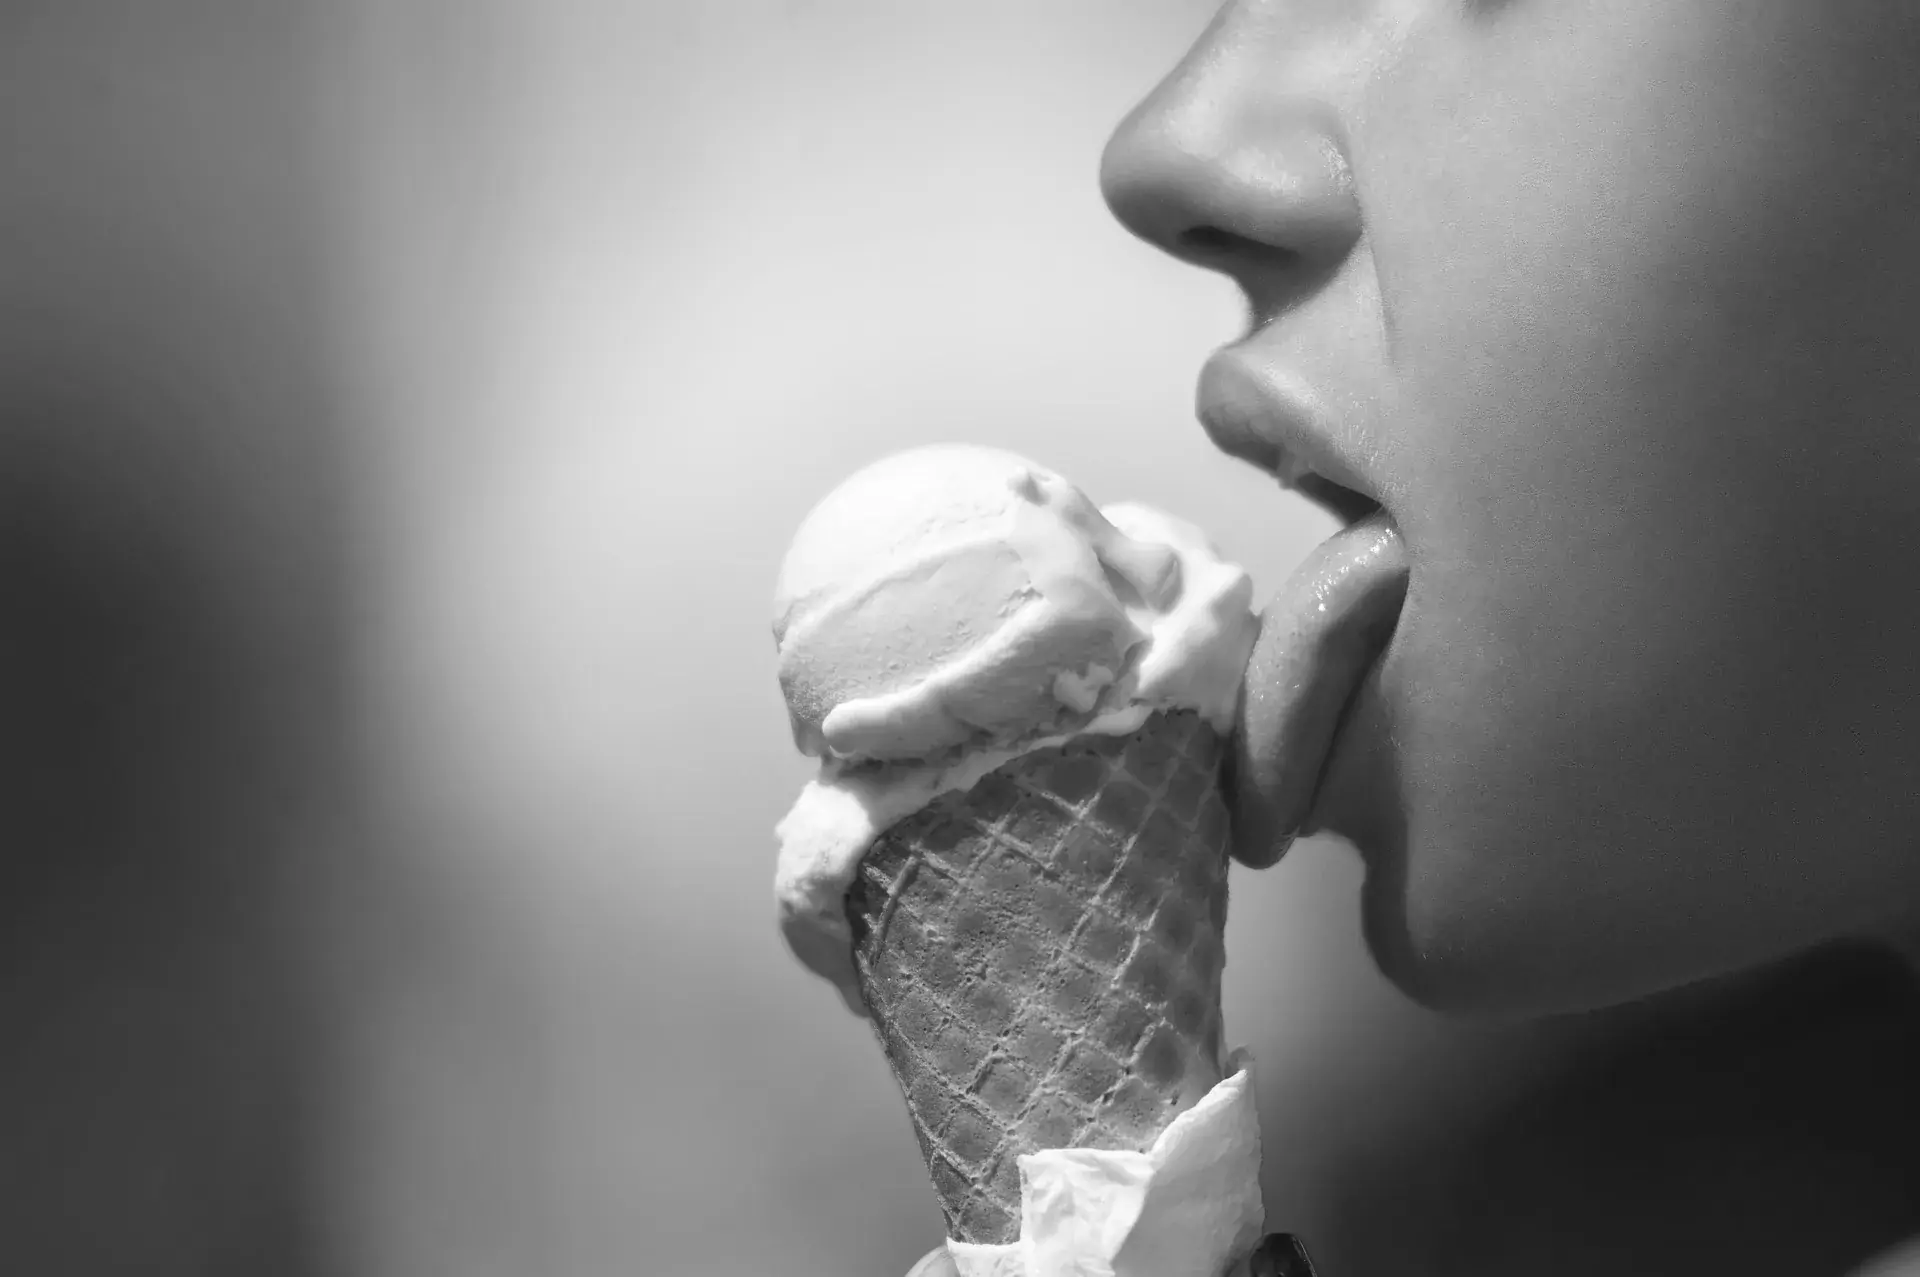 A child licking on icecream (genre image).